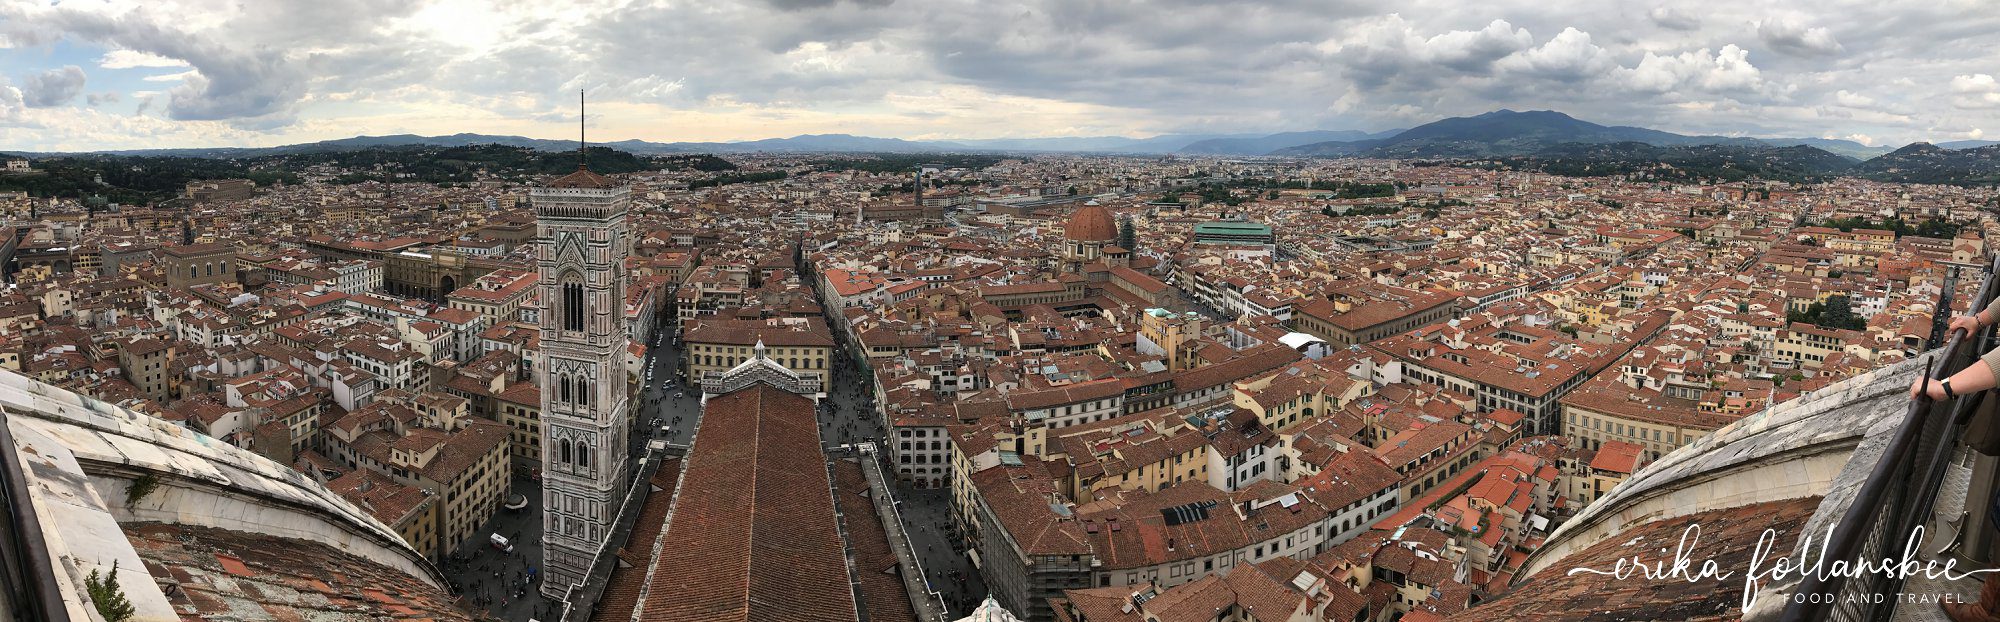 Pano photo from Duomo cupola